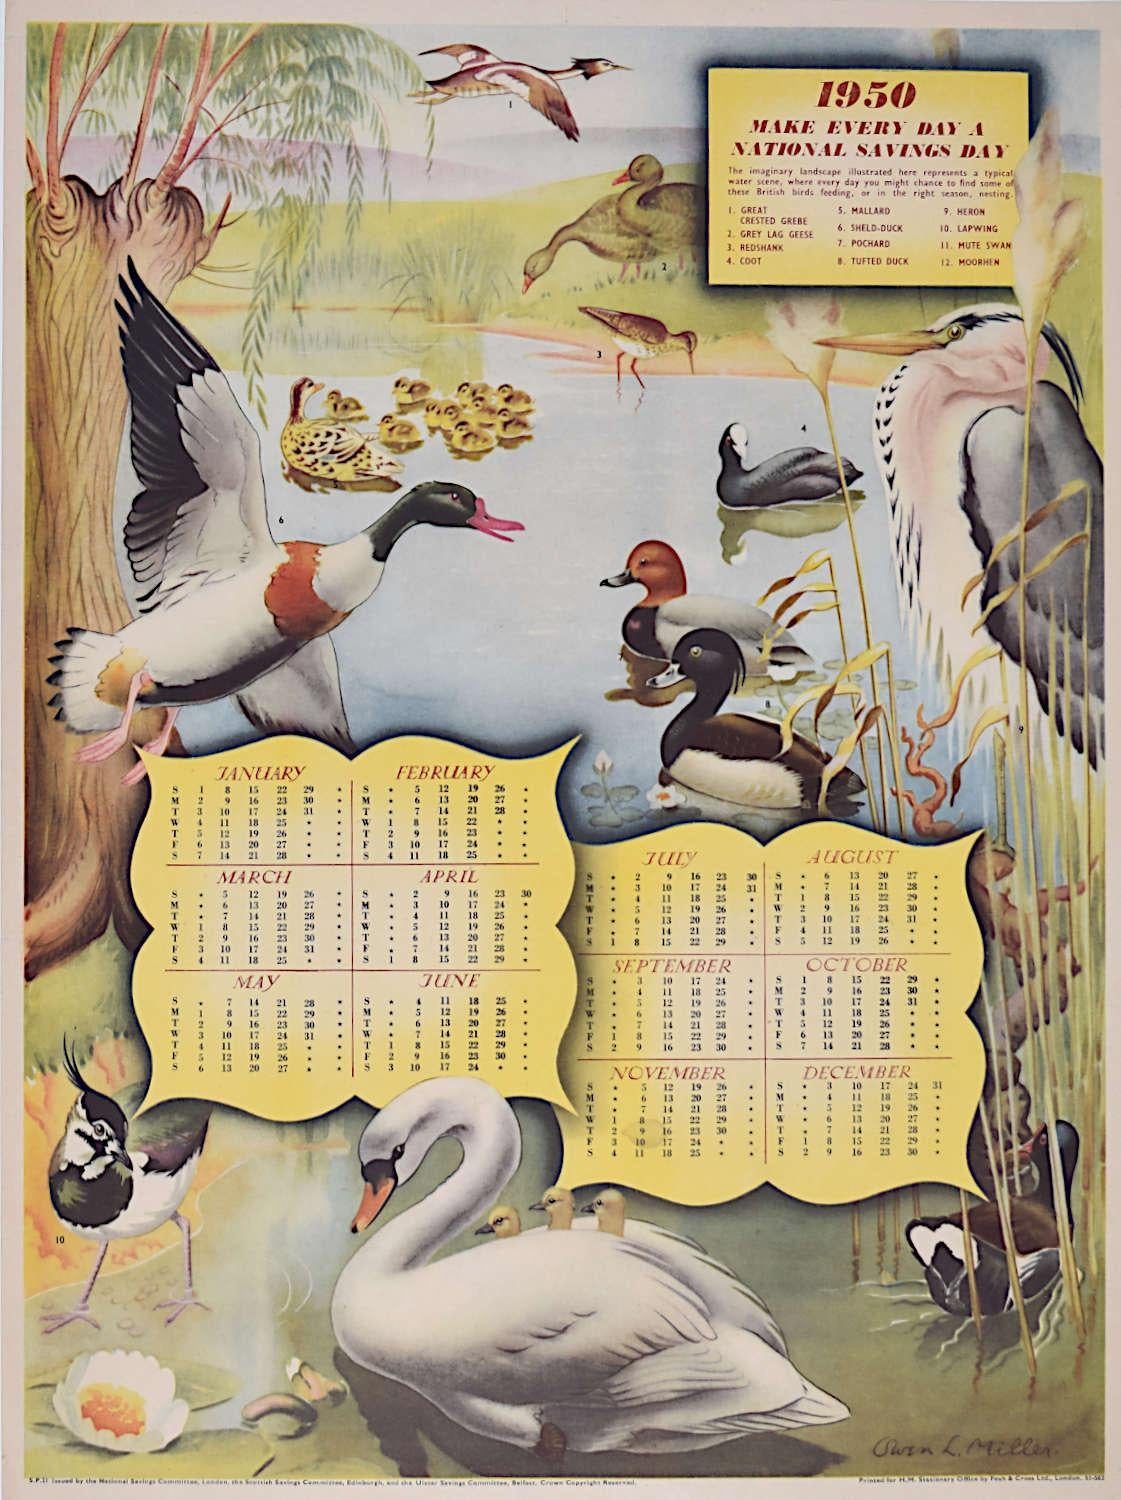 1950 calendar